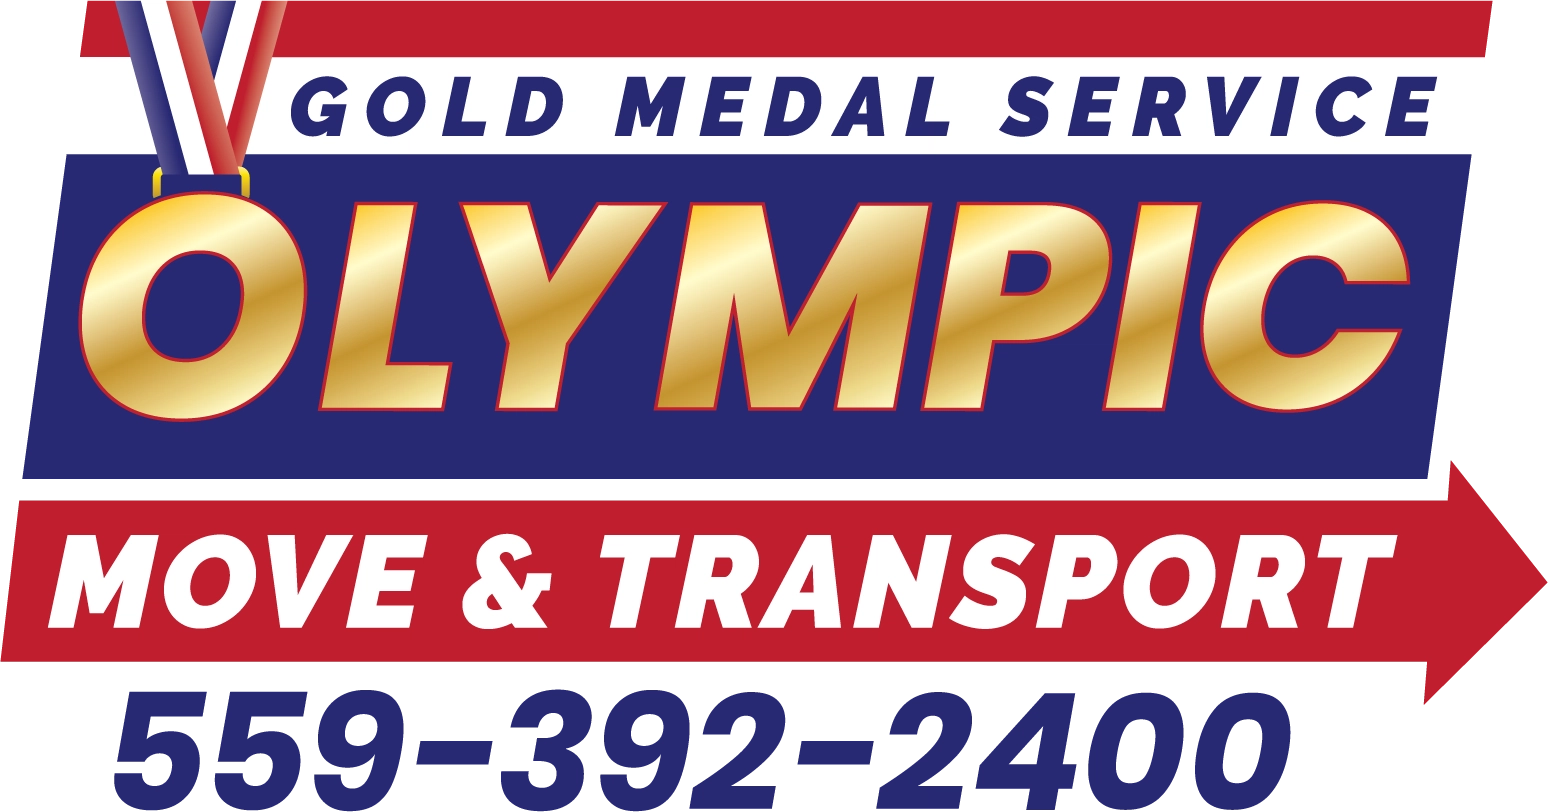 Olympic Move & Transport - Moving Company Fresno & Clovis Logo